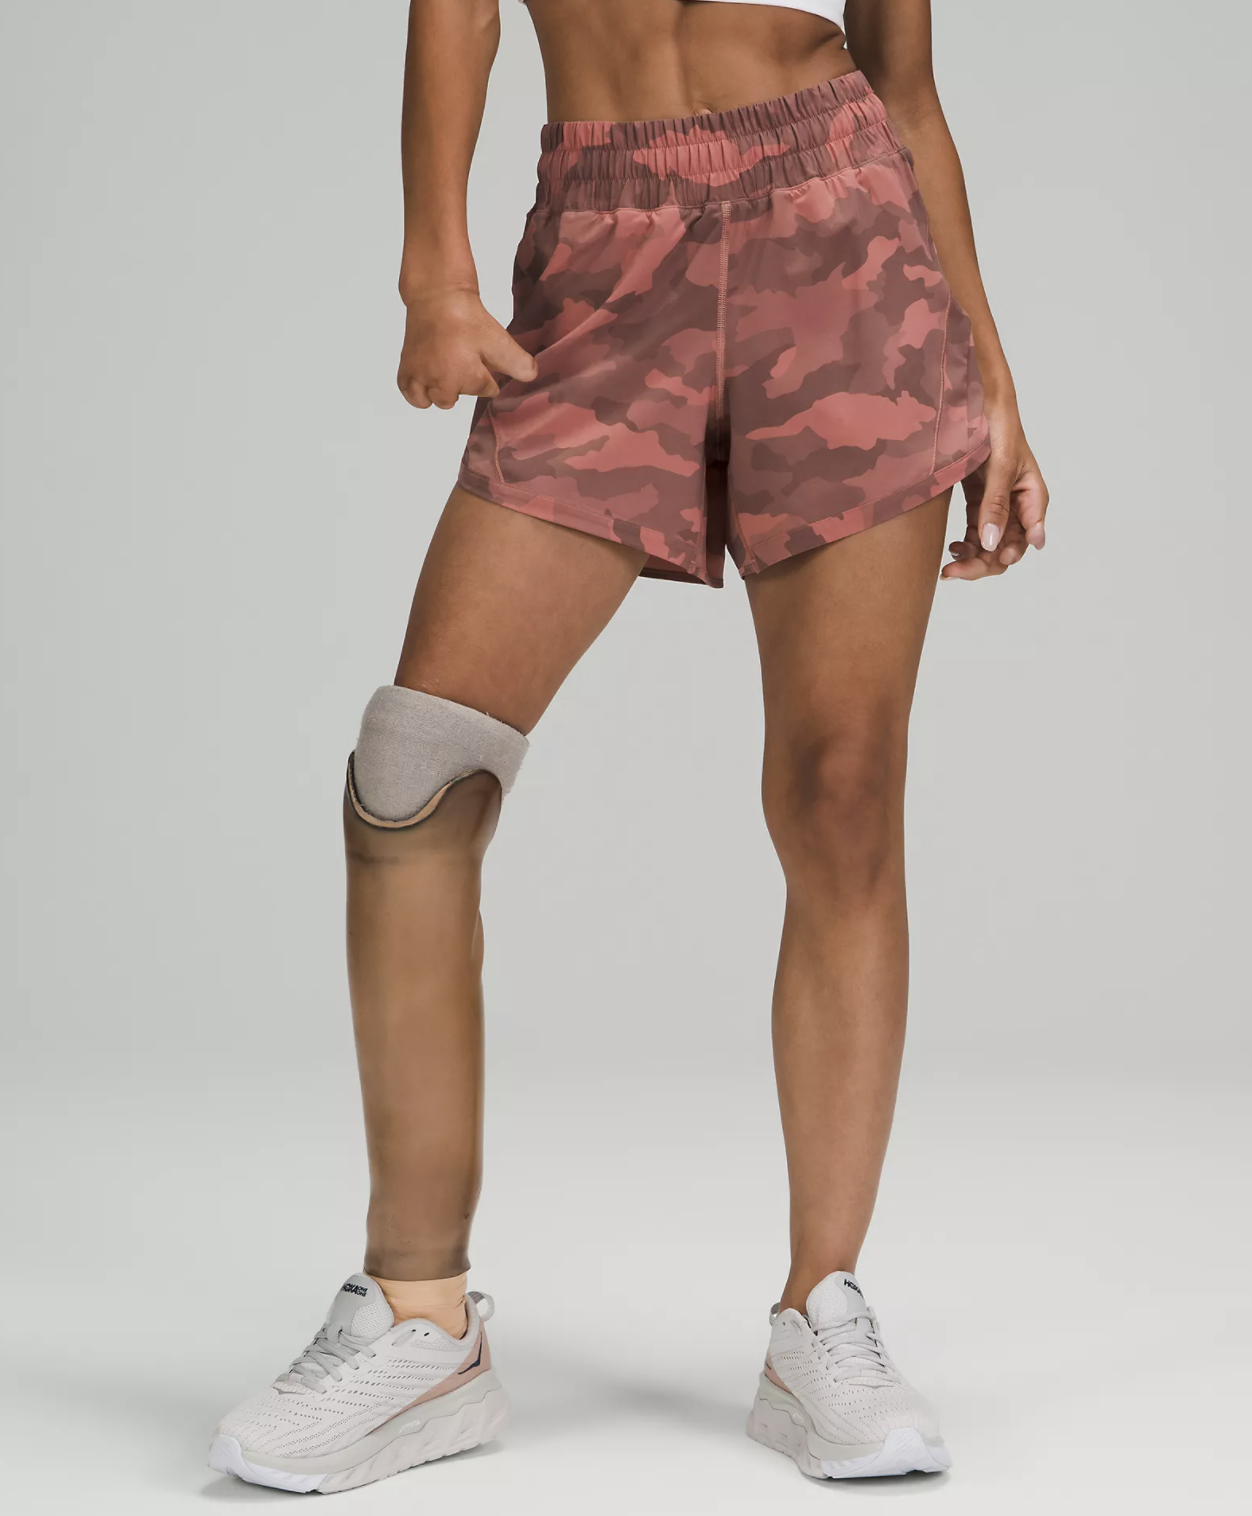 Model wearing pink camo shorts